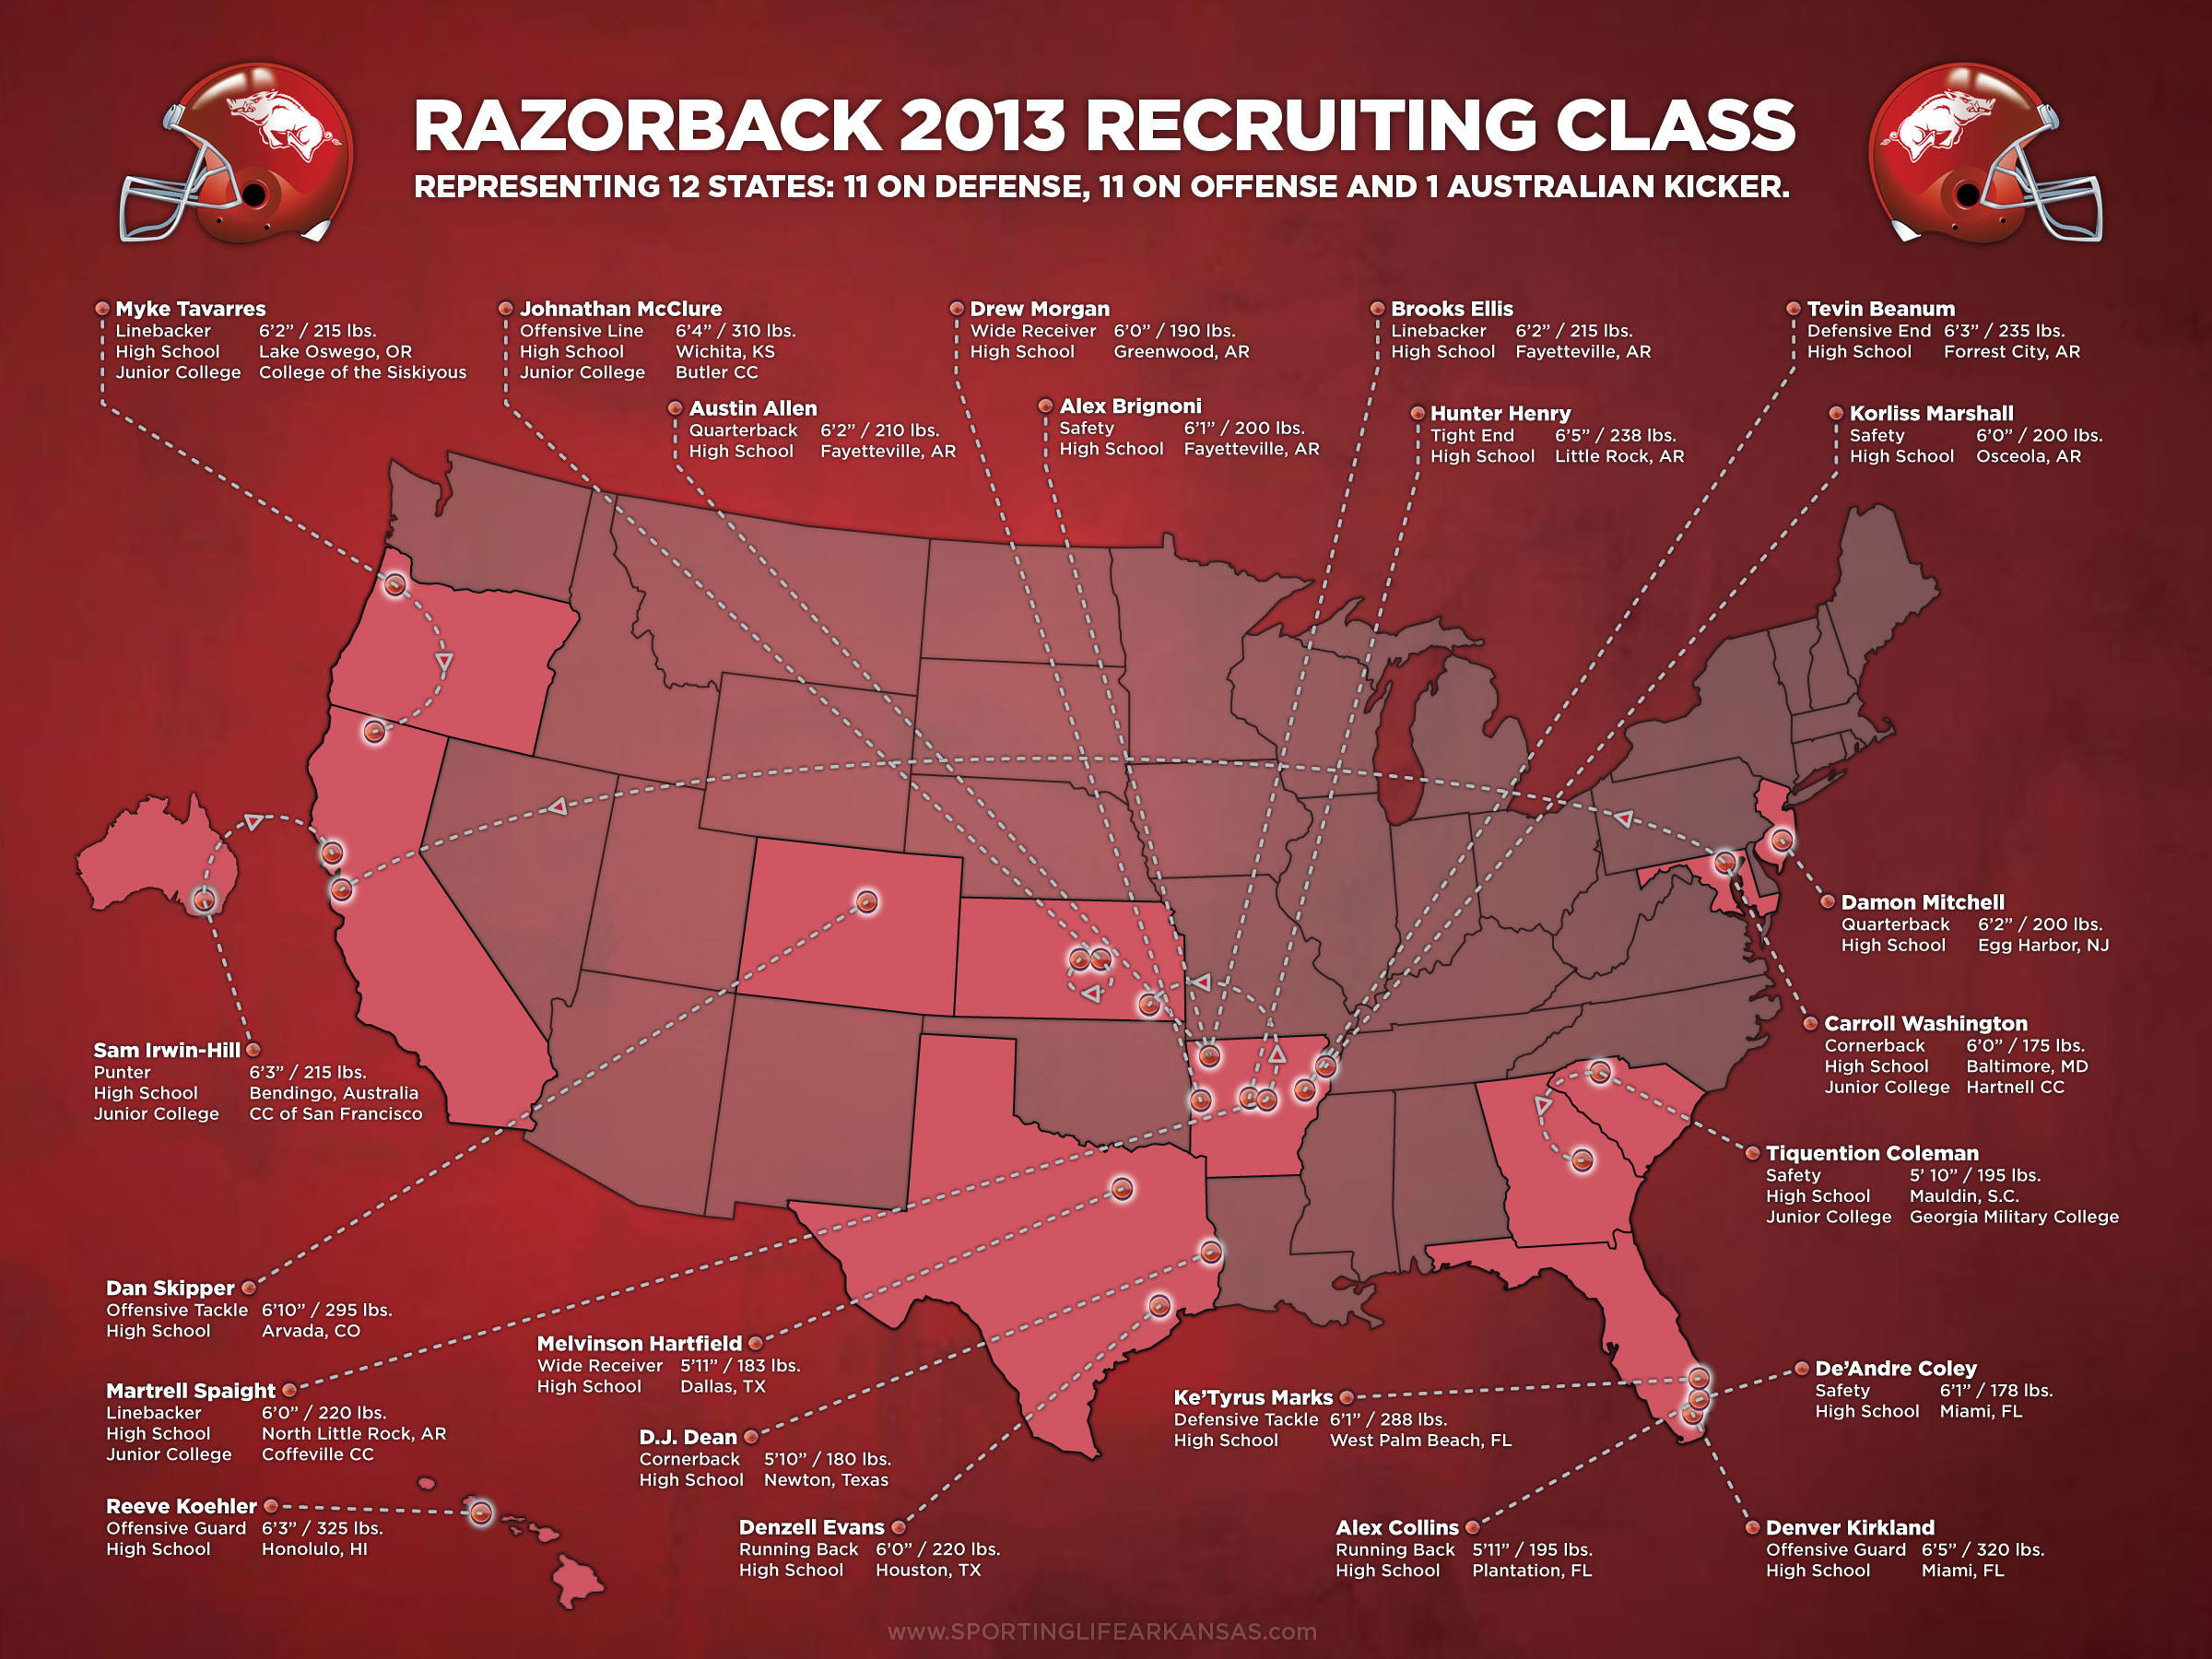 INFOGRAPHIC – 2013 Razorback Recruiting Class | Sporting Life Arkansas